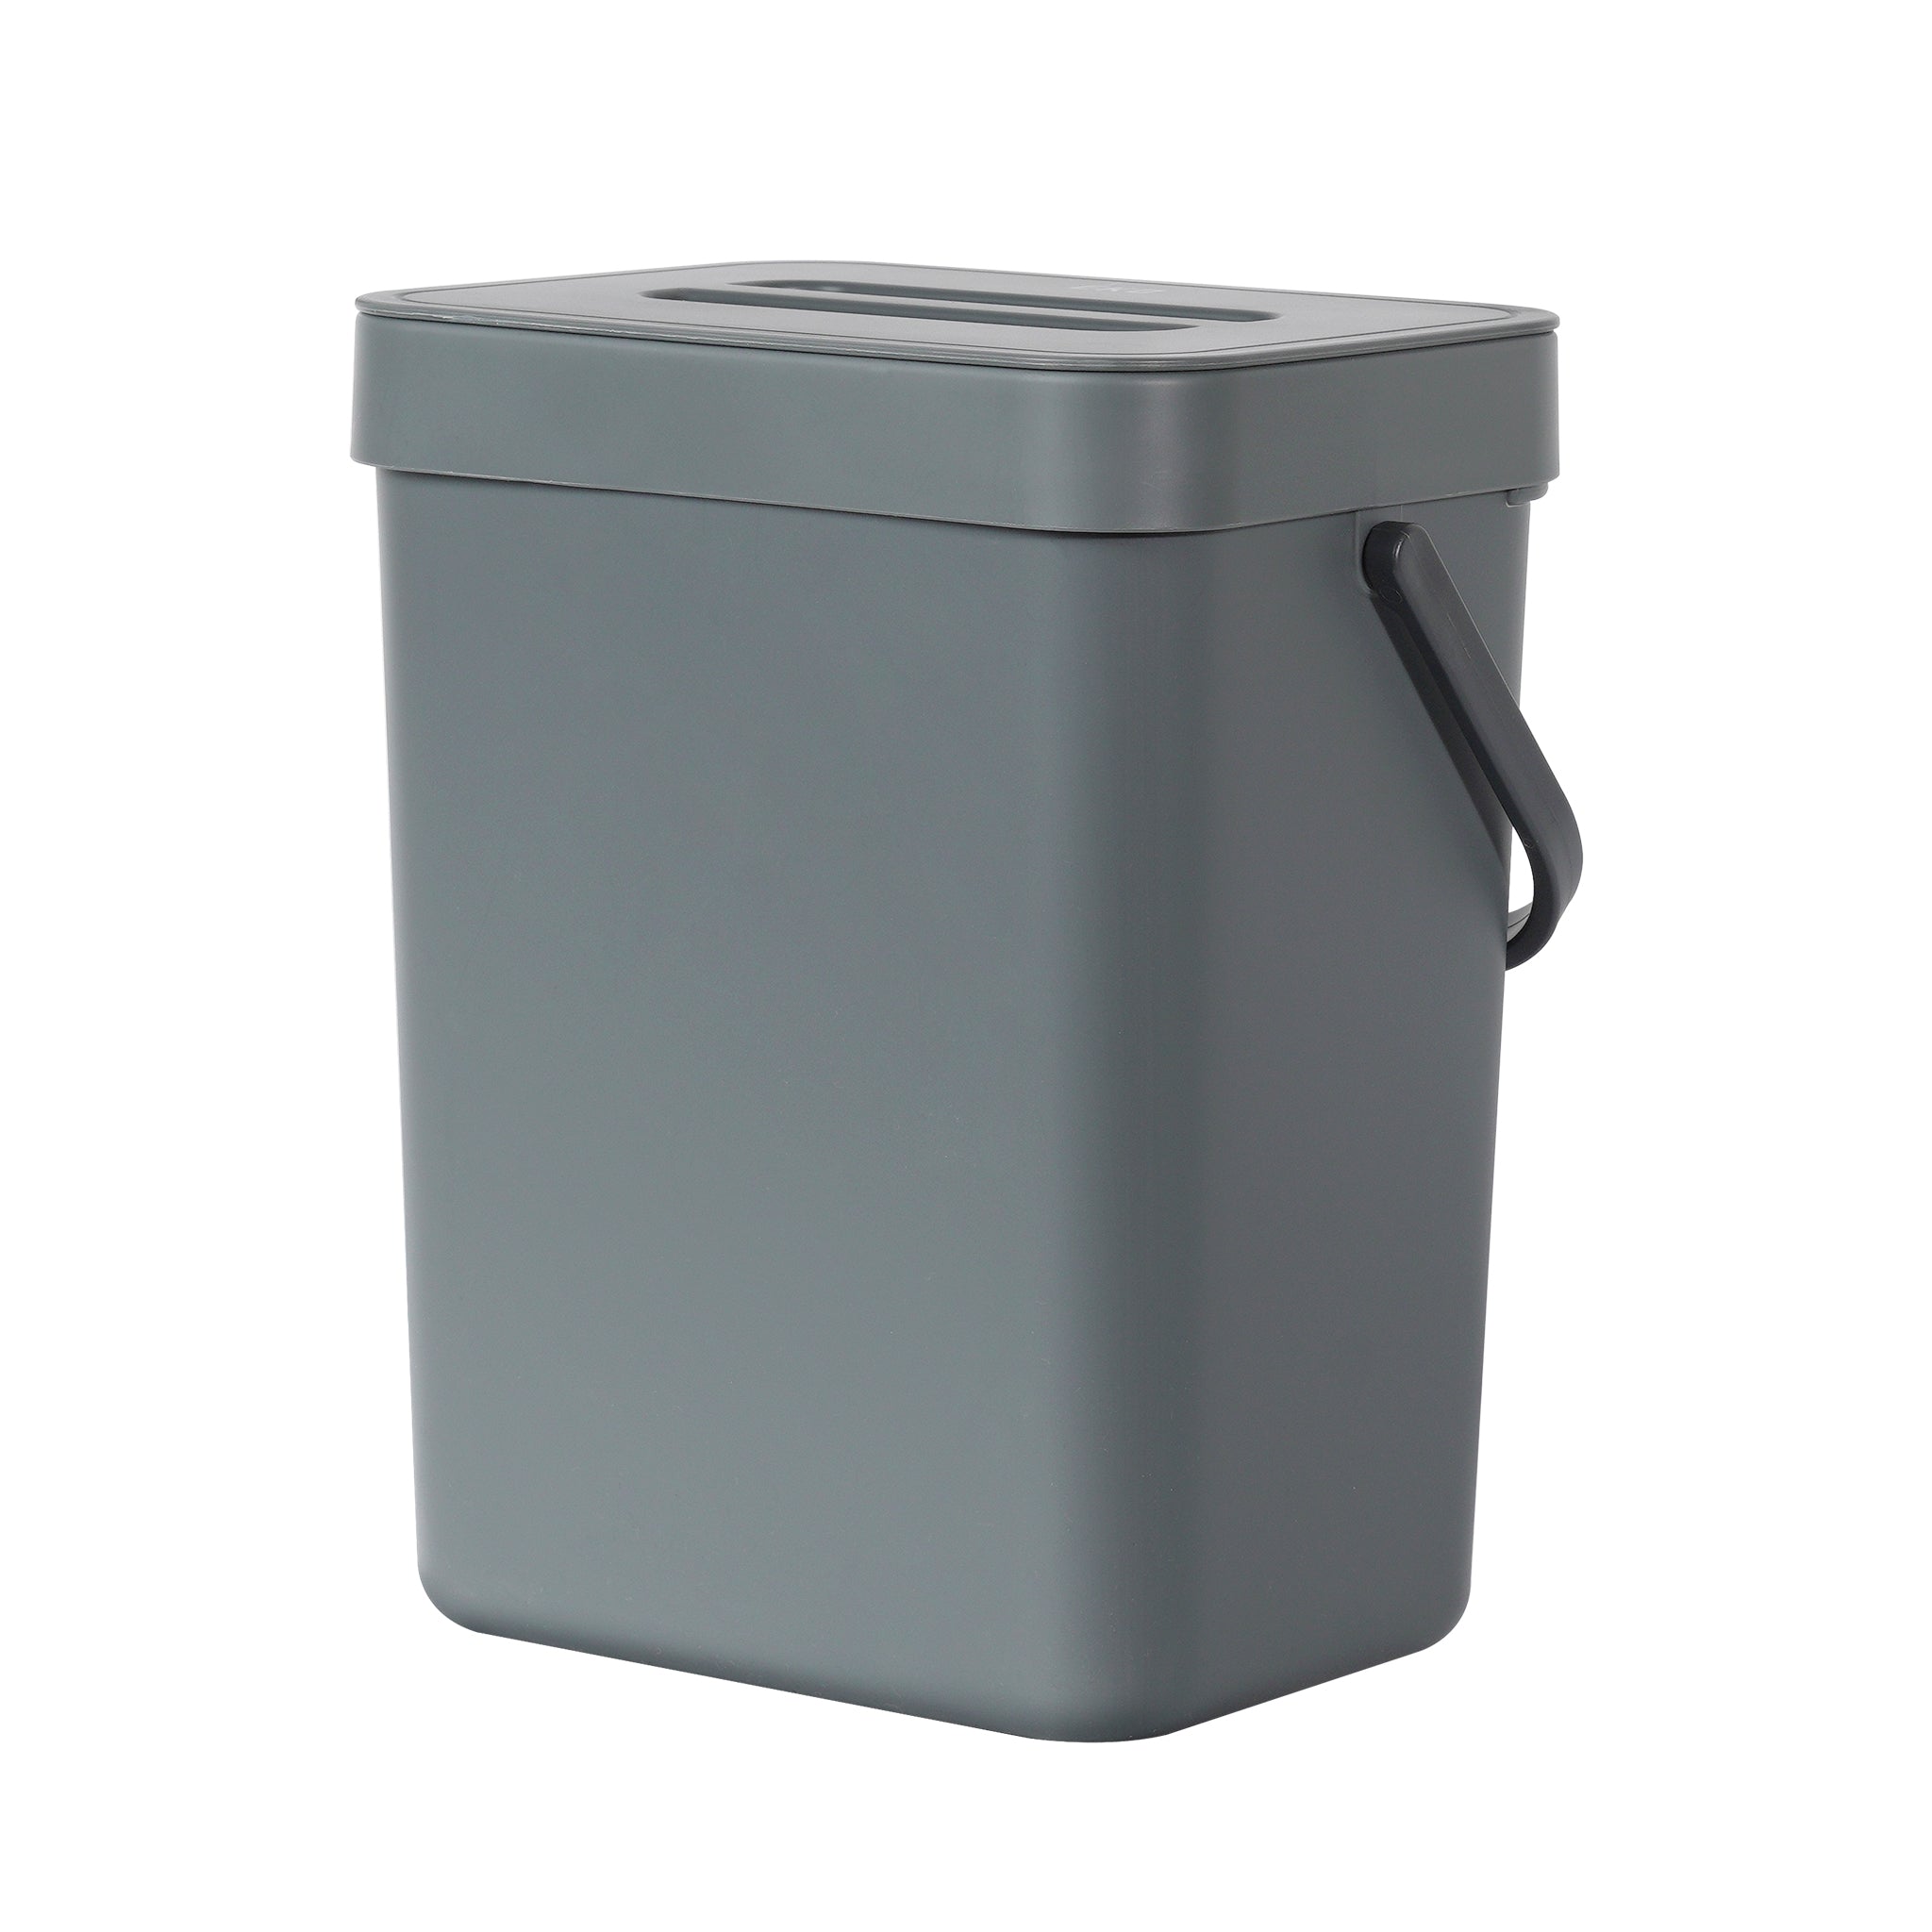 Puro Compost Bin with Lid - Dark Gray 3L / 0.79 Gal